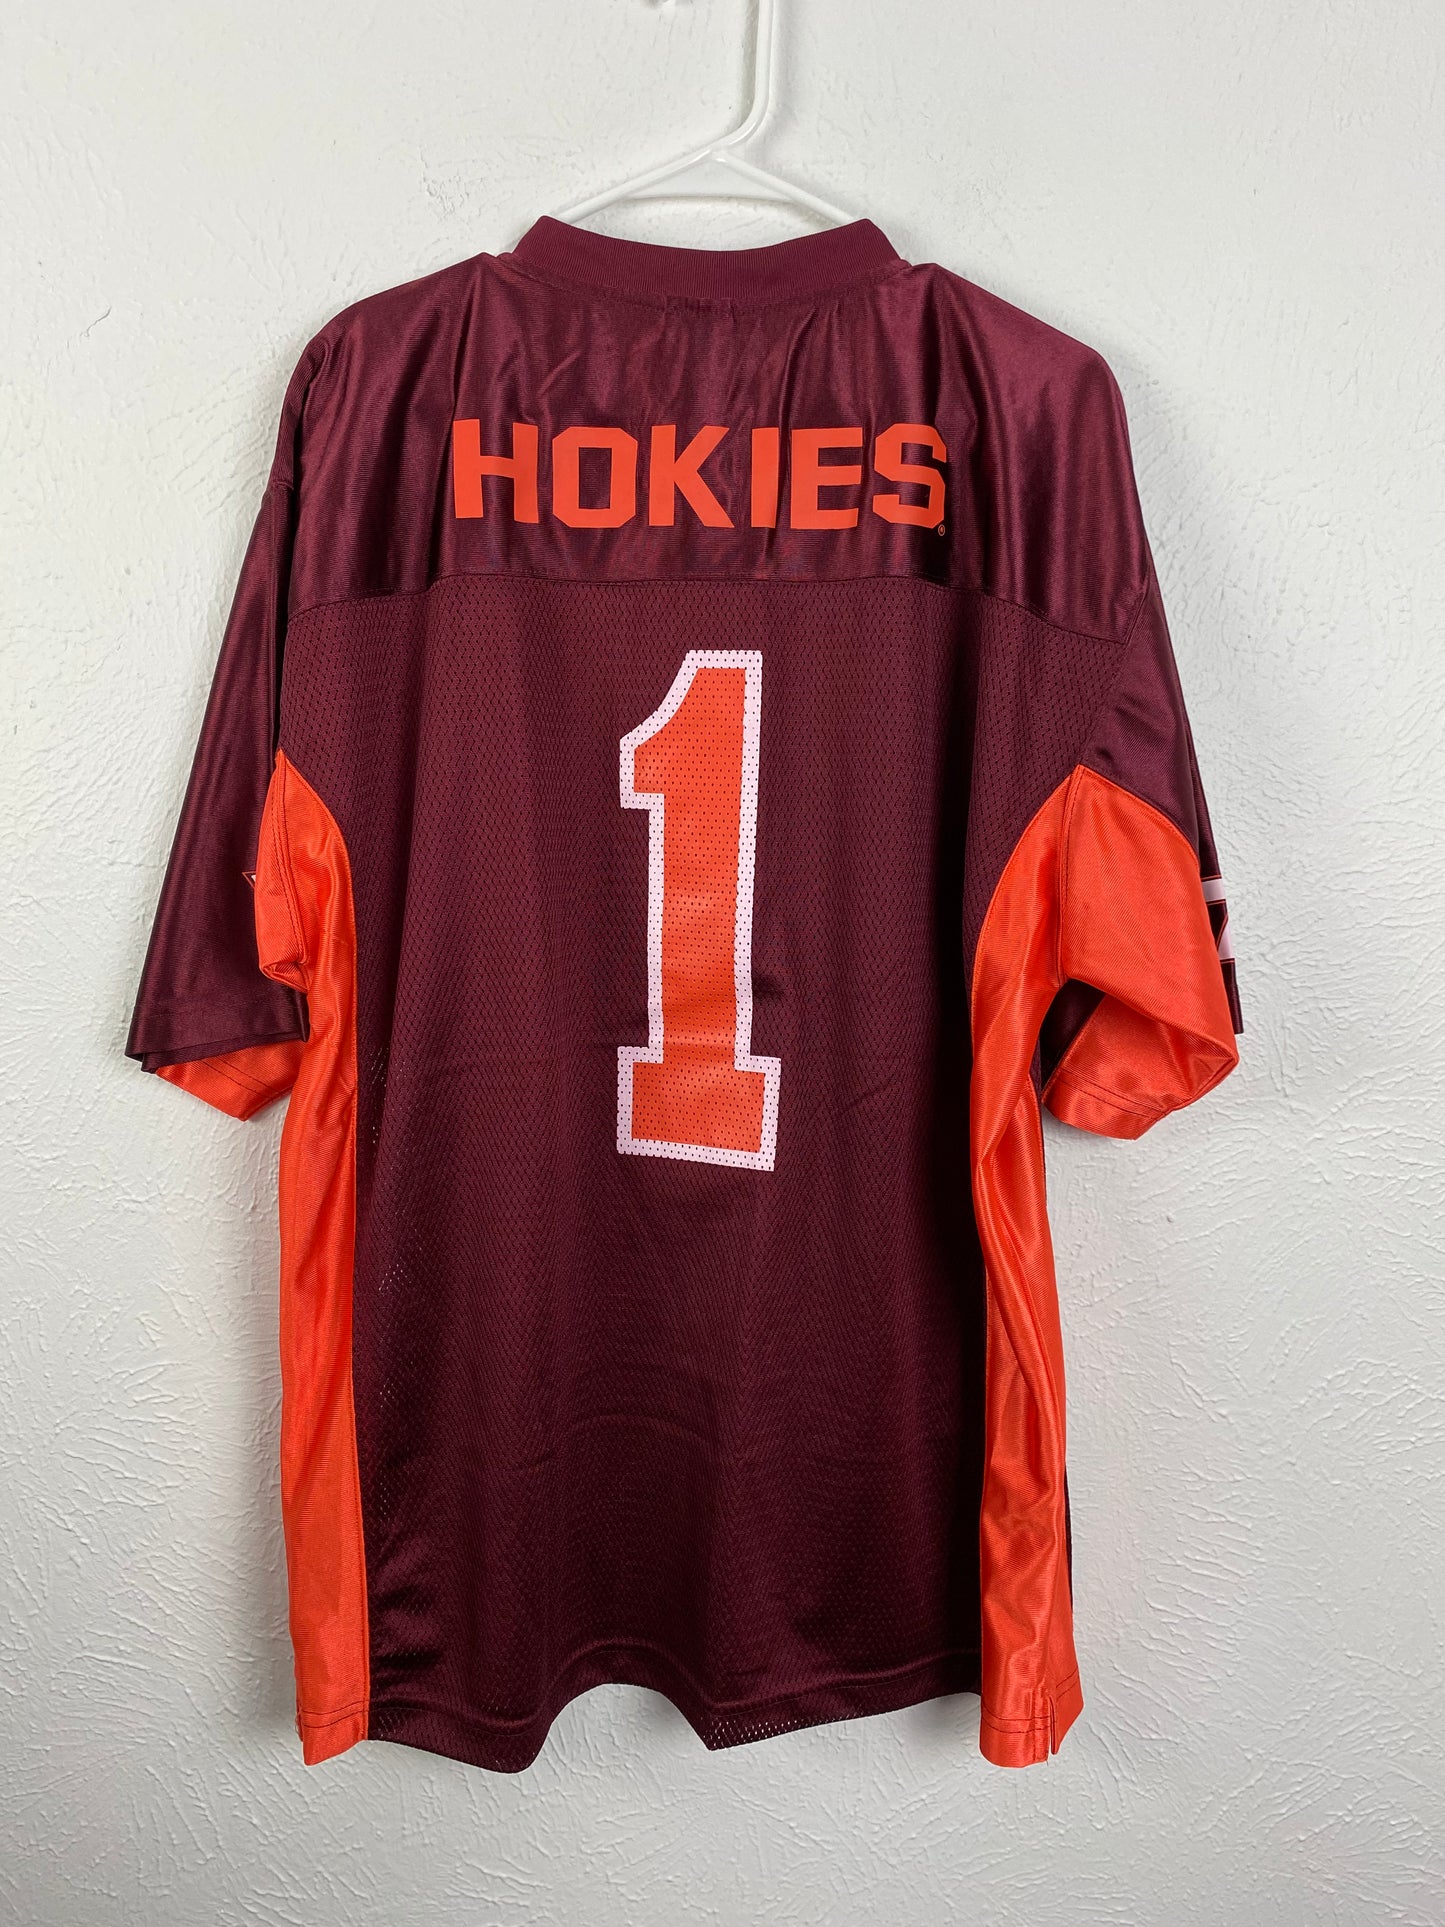 Virginia Tech Hokies Football Jersey